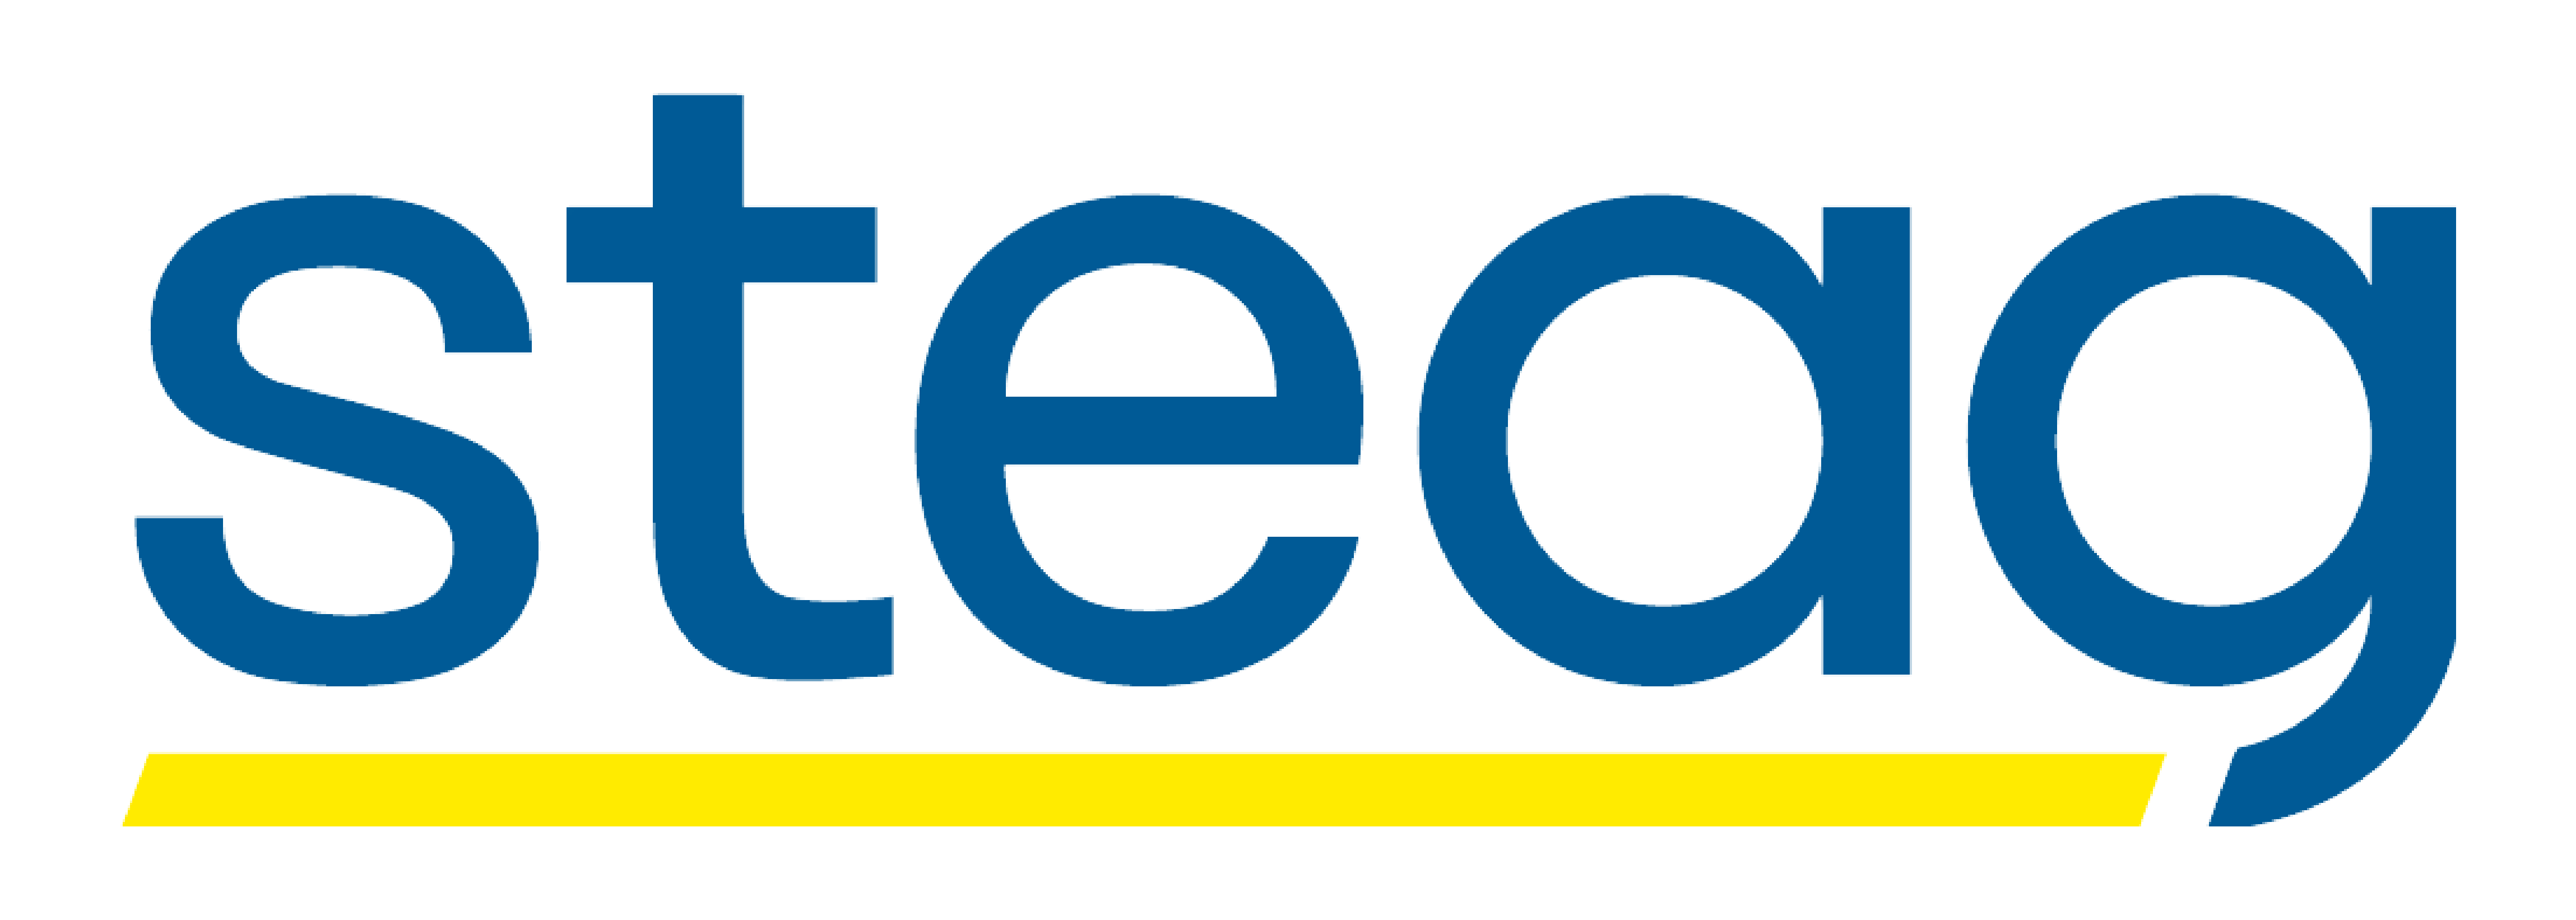 de4.0-steag's provider logo